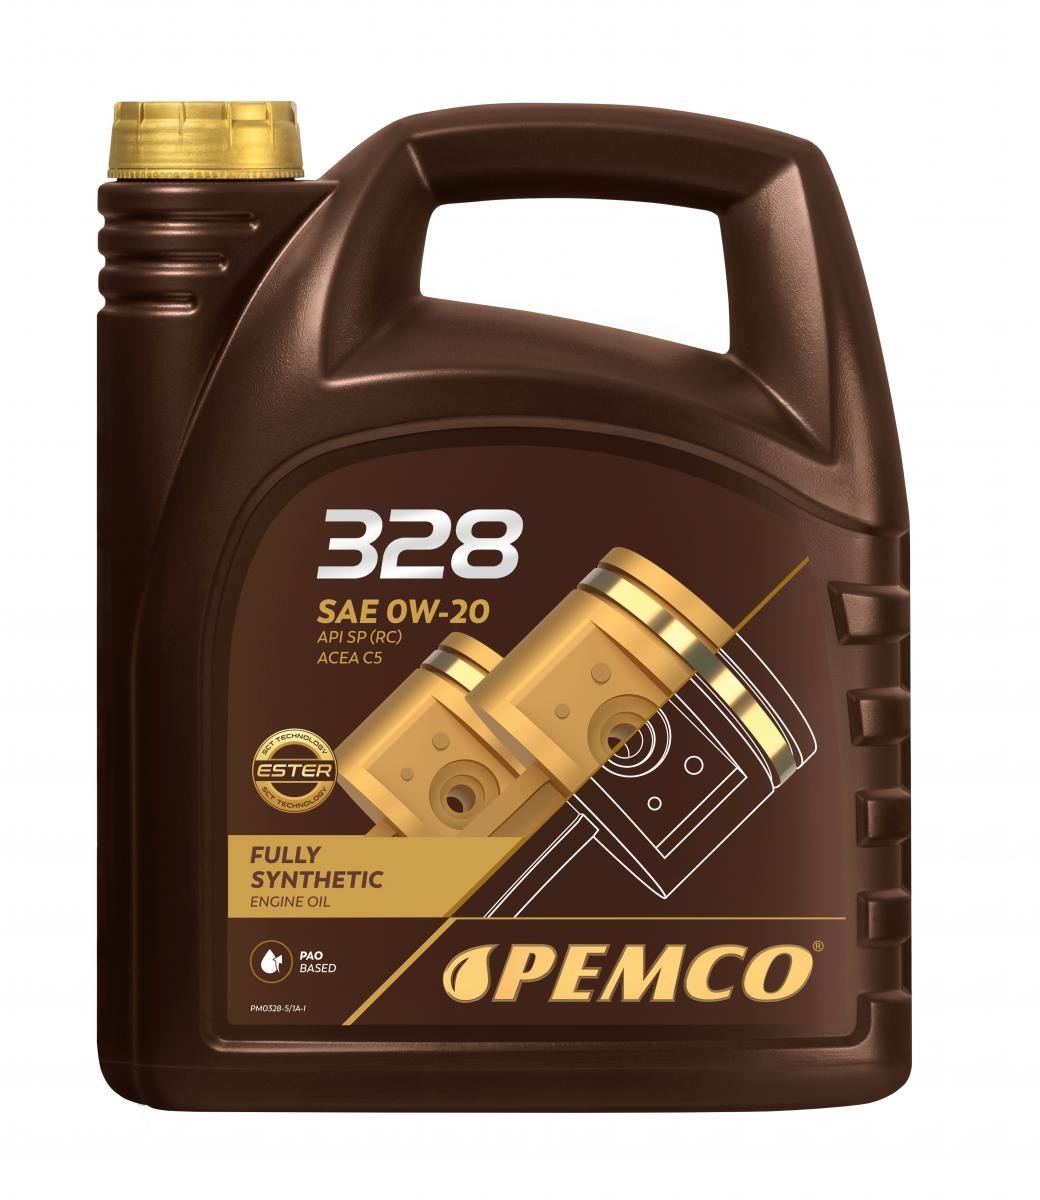 Car oil dexos1 gen 2 PEMCO diesel - PM0328-5 328